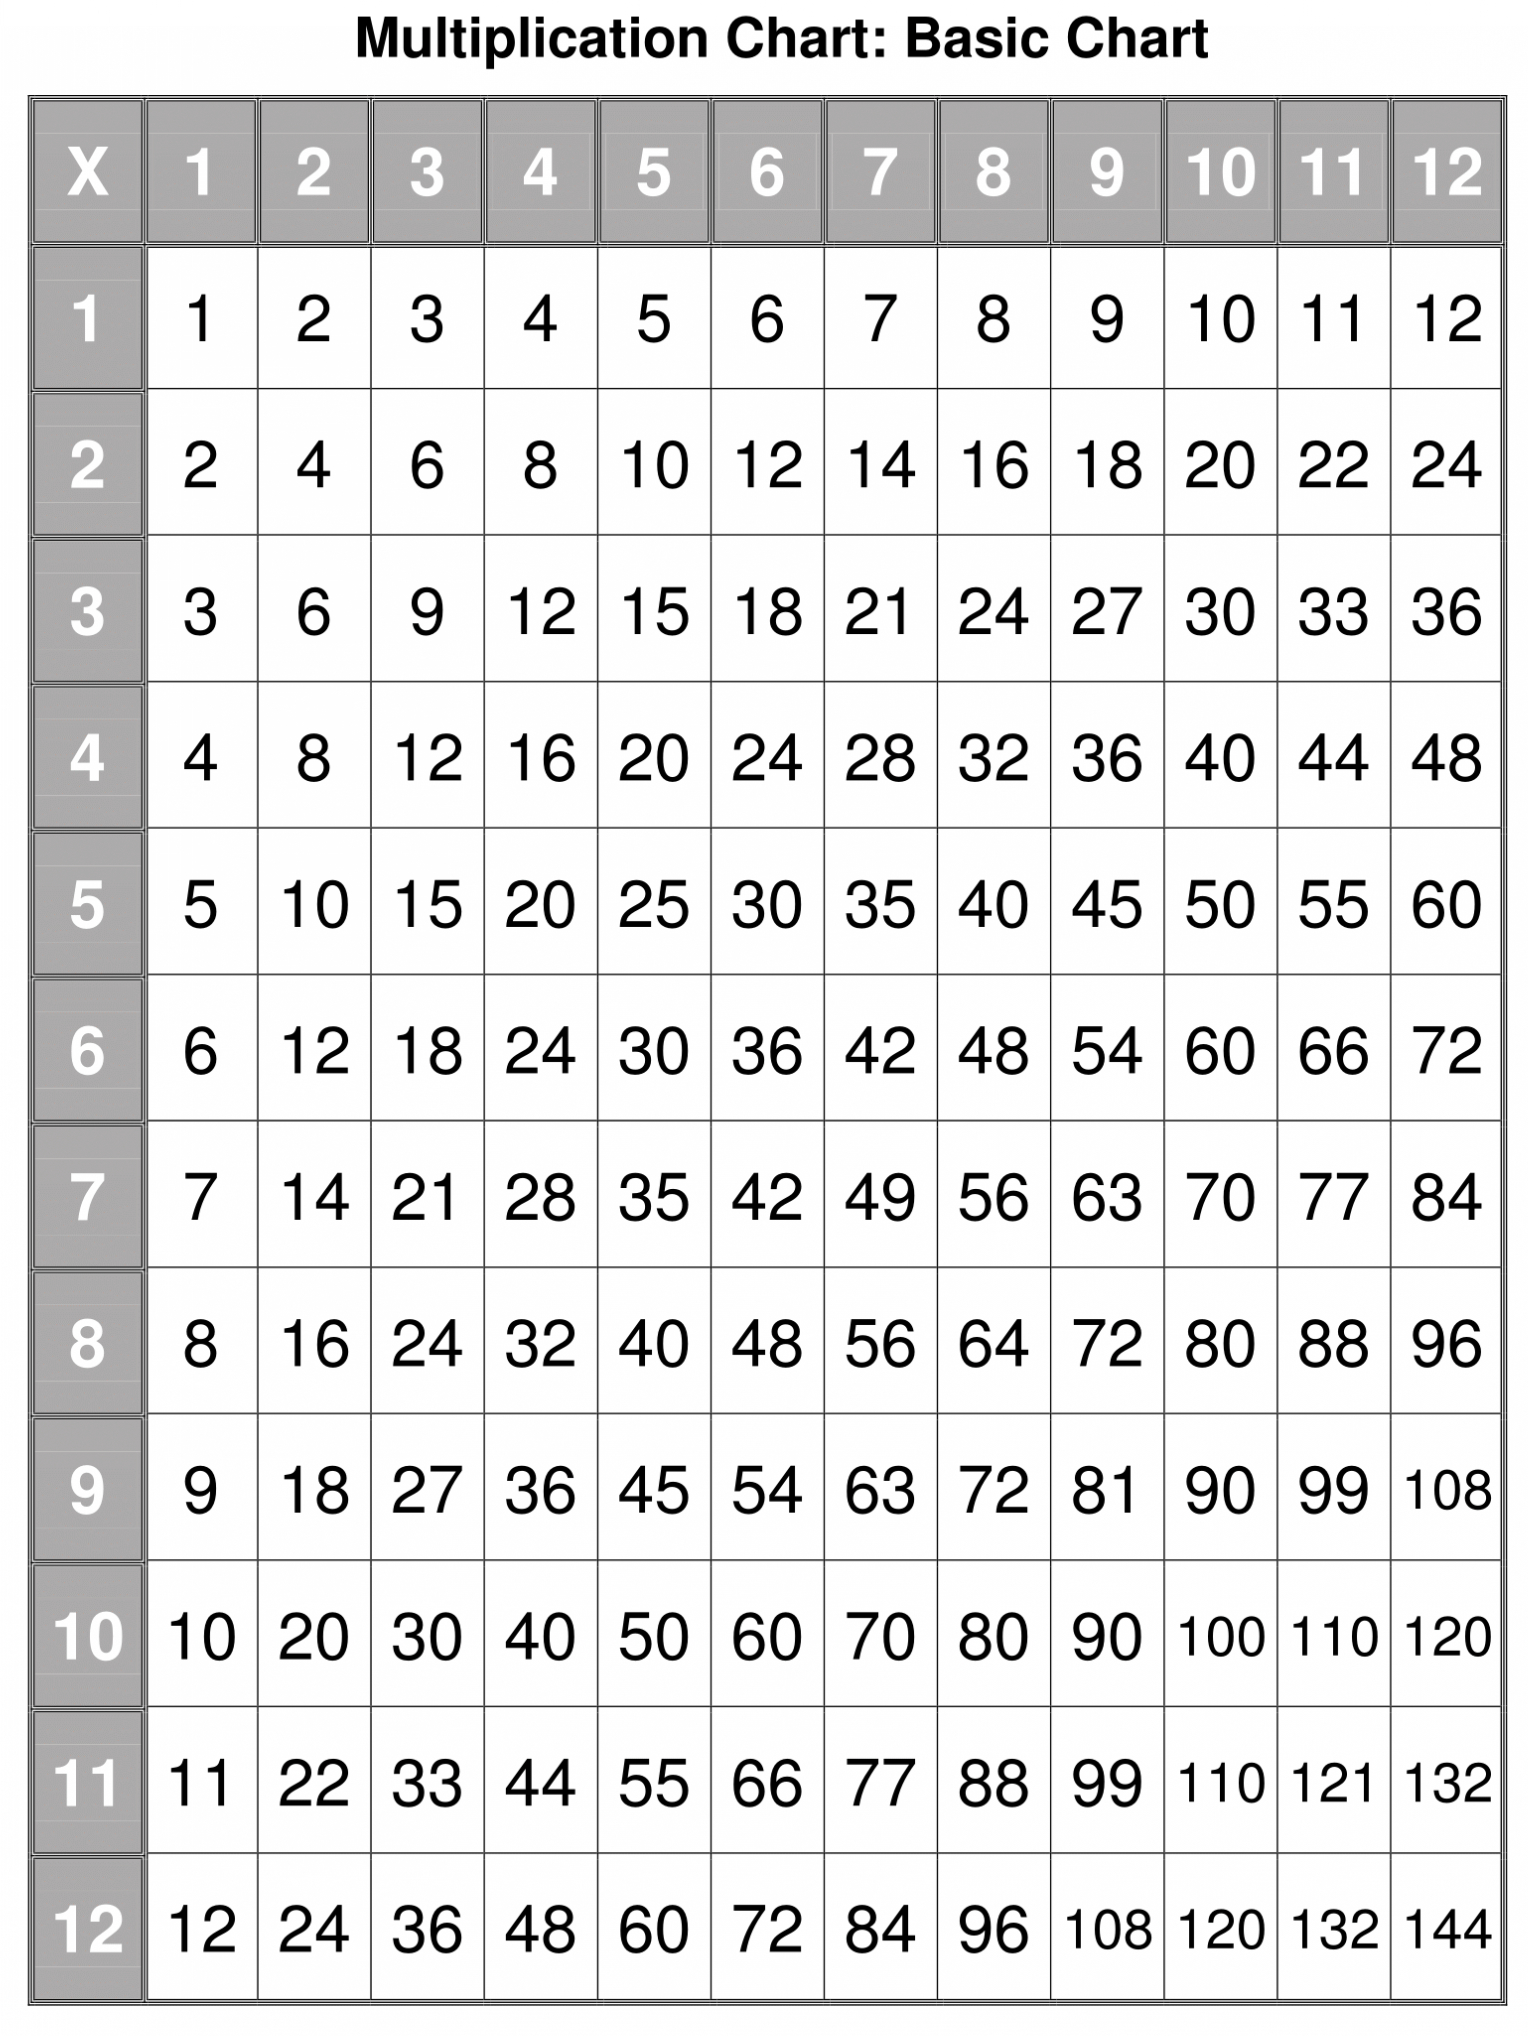 Printable Multiplication Table Pdf | Multiplication Charts intended for Printable Multiplication Chart 1-12 Pdf